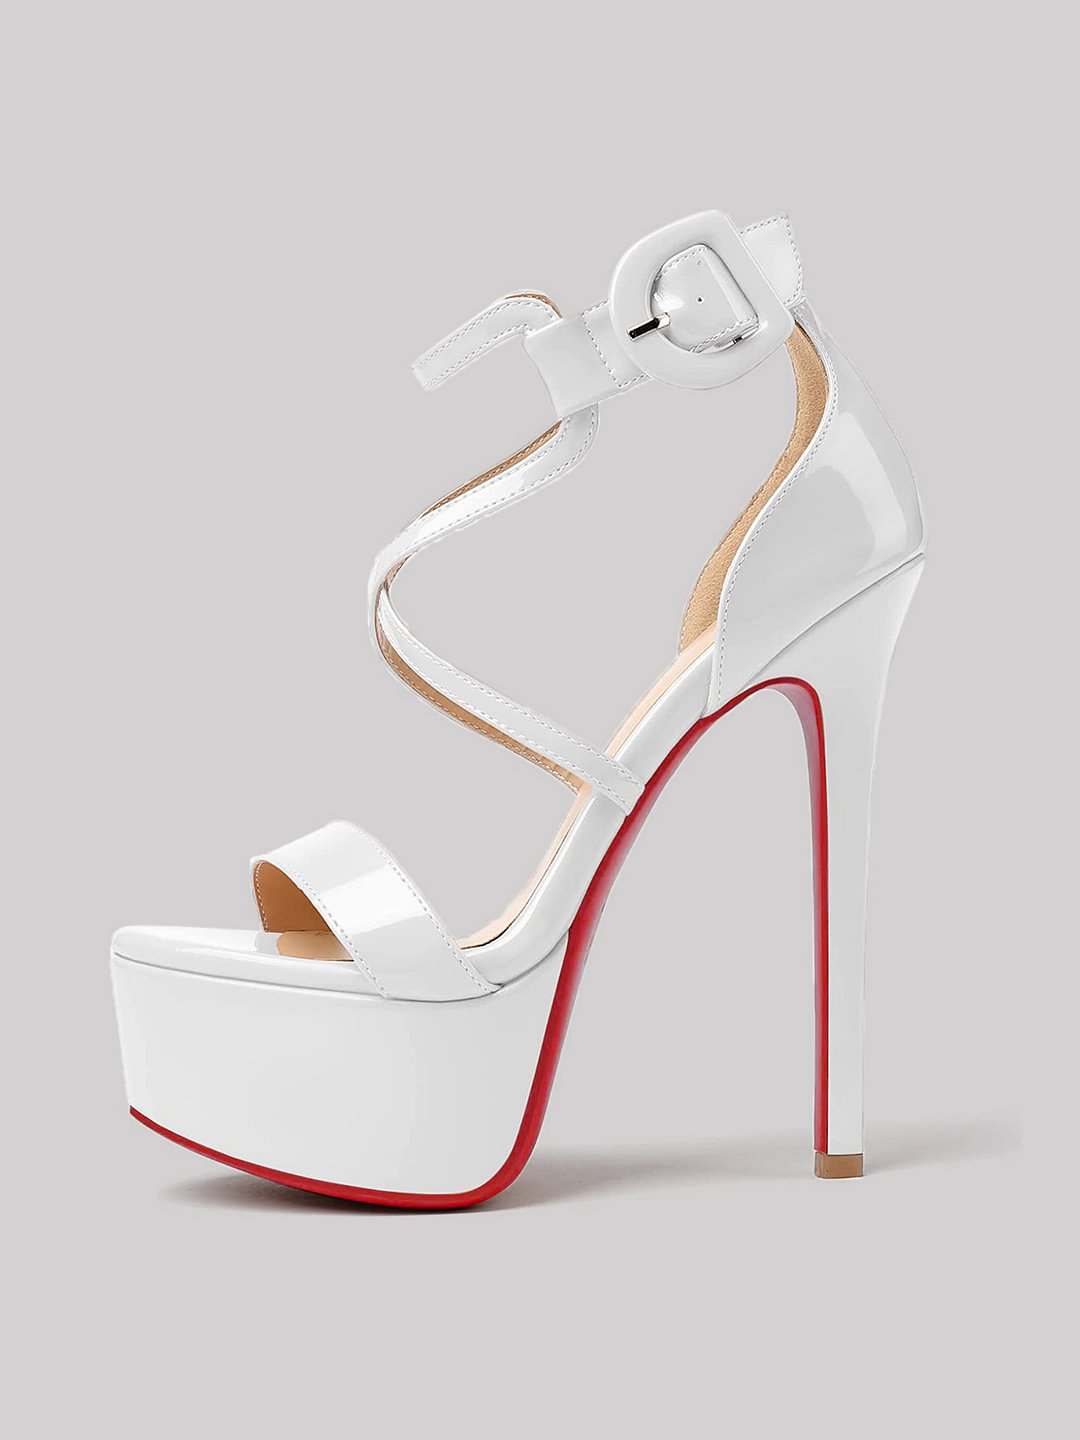 150mm Women's Open Toe Platform Sandals Ankle Strap High Heel Patent Red Bottom Summer Shoes